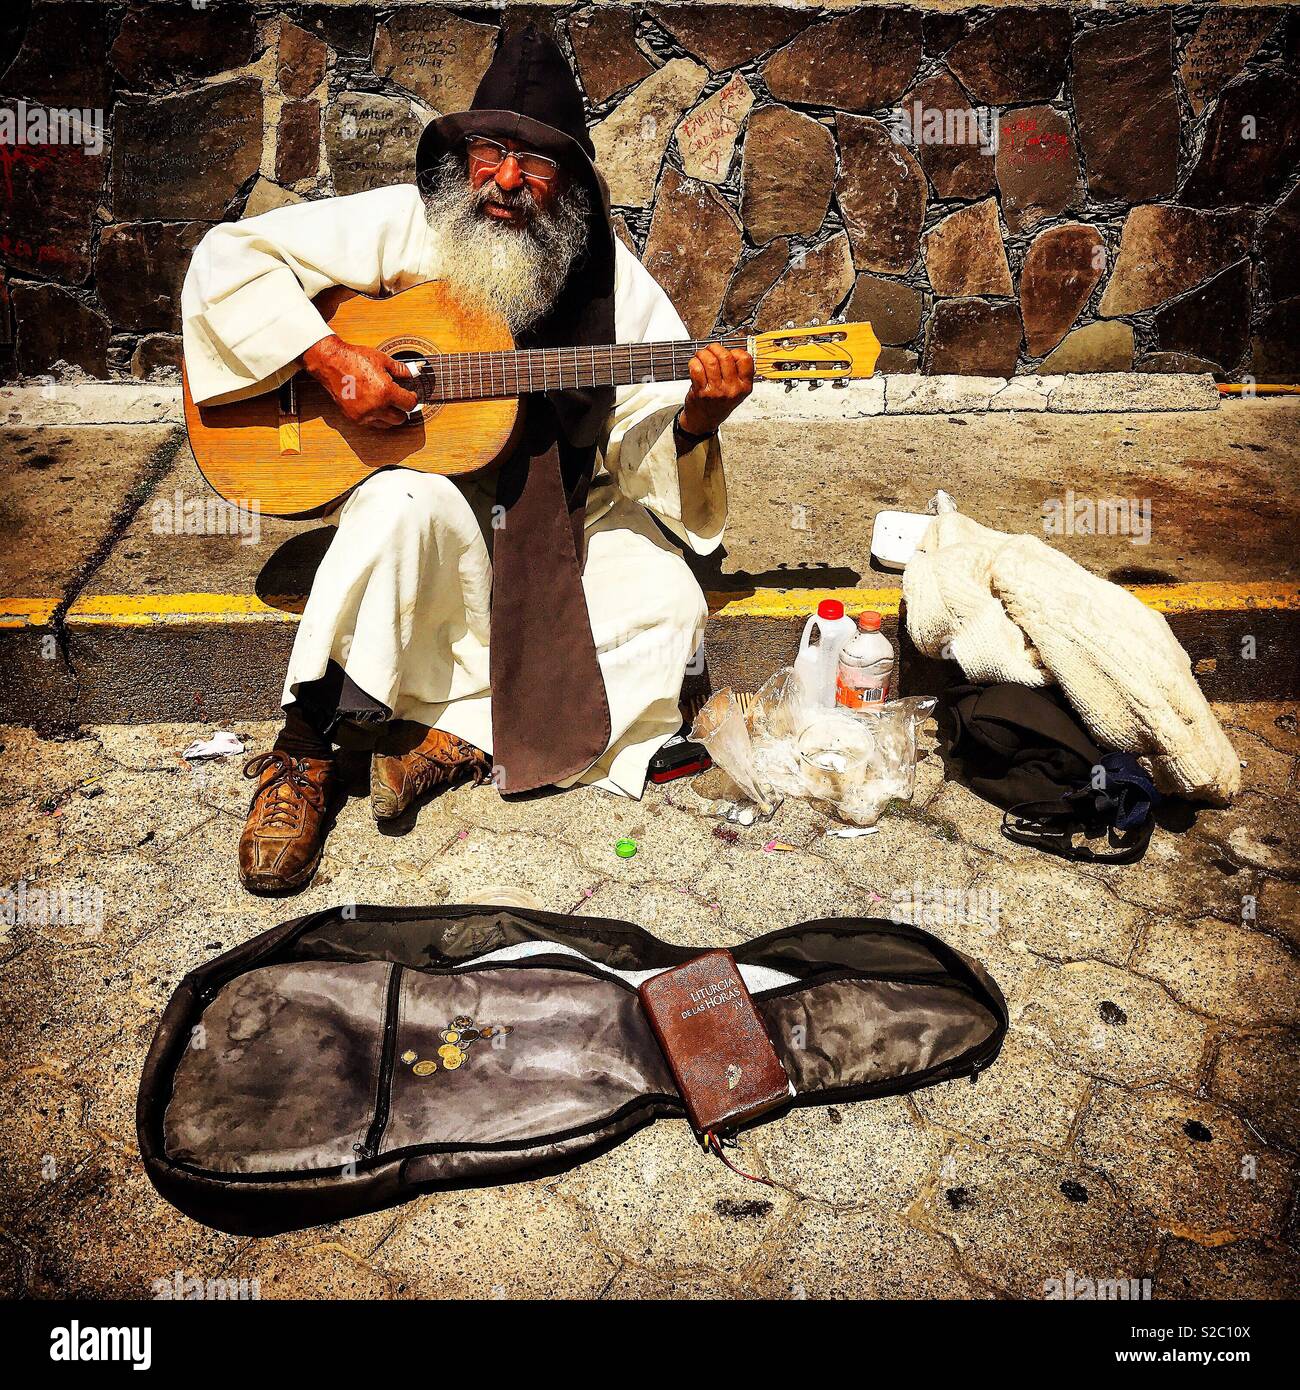 A Catholic monk plays the guitar in Cerro del Cubilete, in the Cristo Rey or Christ the King hill in Silao, Guanajuato, Mexico Stock Photo